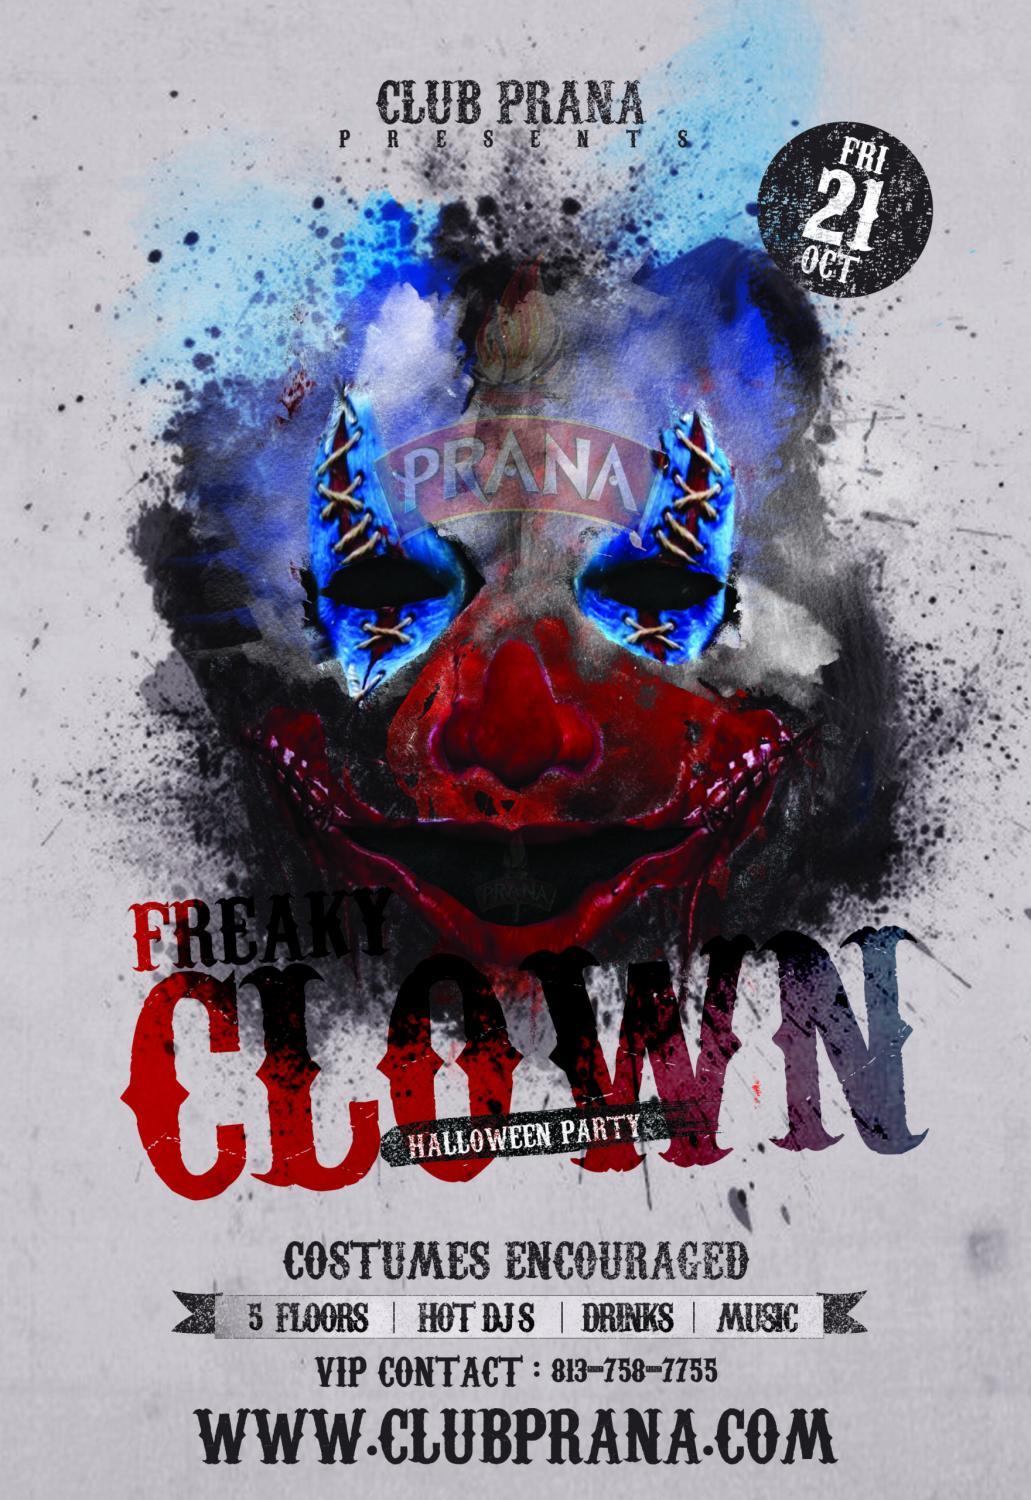 Halloween Freaky Clown Party at Club Prana
Fri Oct 21, 10:00 PM - Fri Oct 21, 12:00 AM
in 4 days